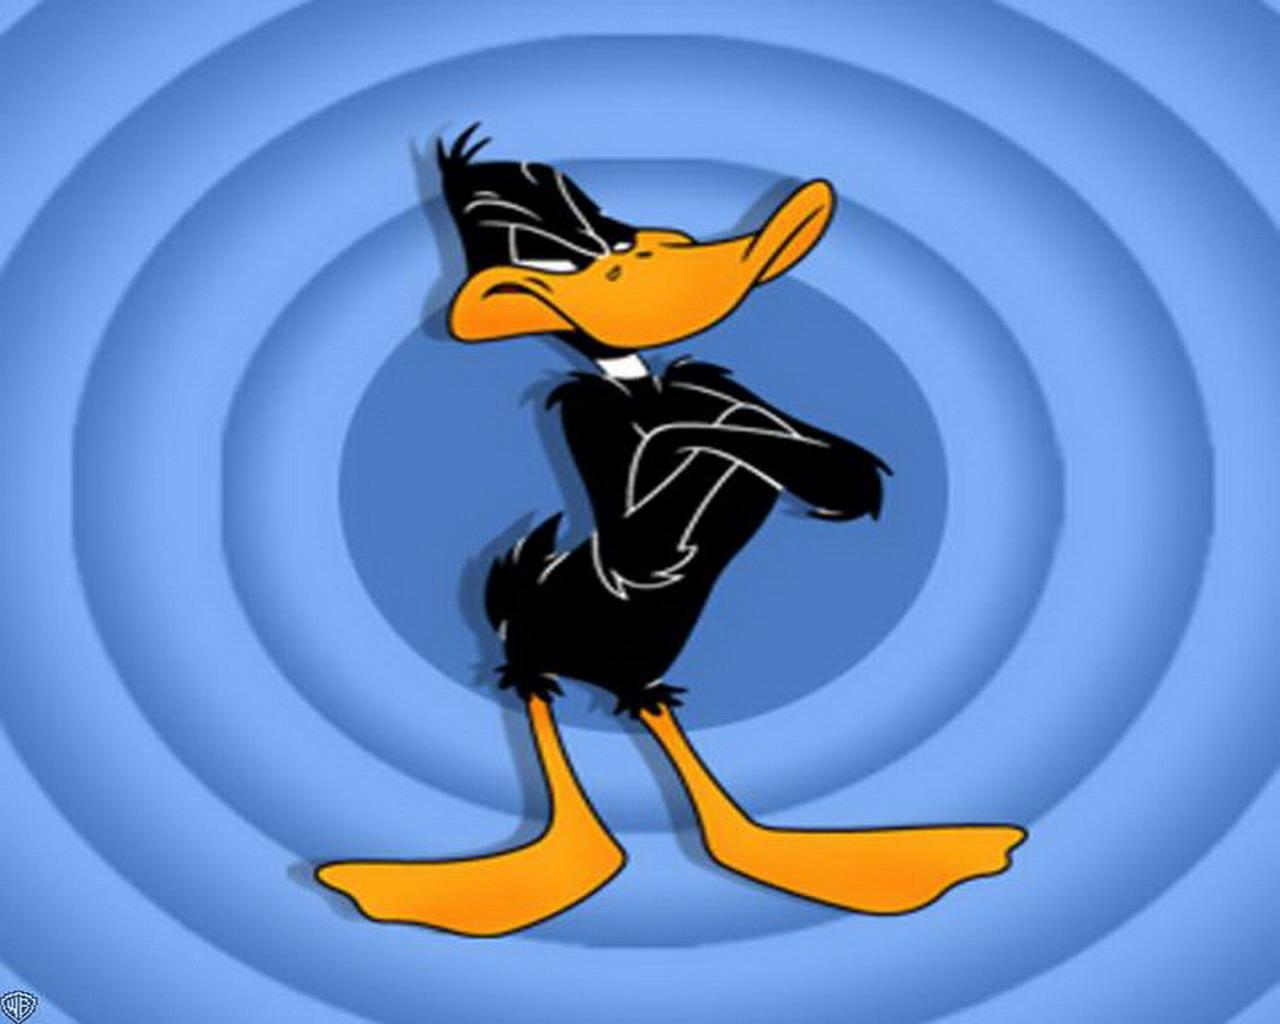 Daffy Duck #17